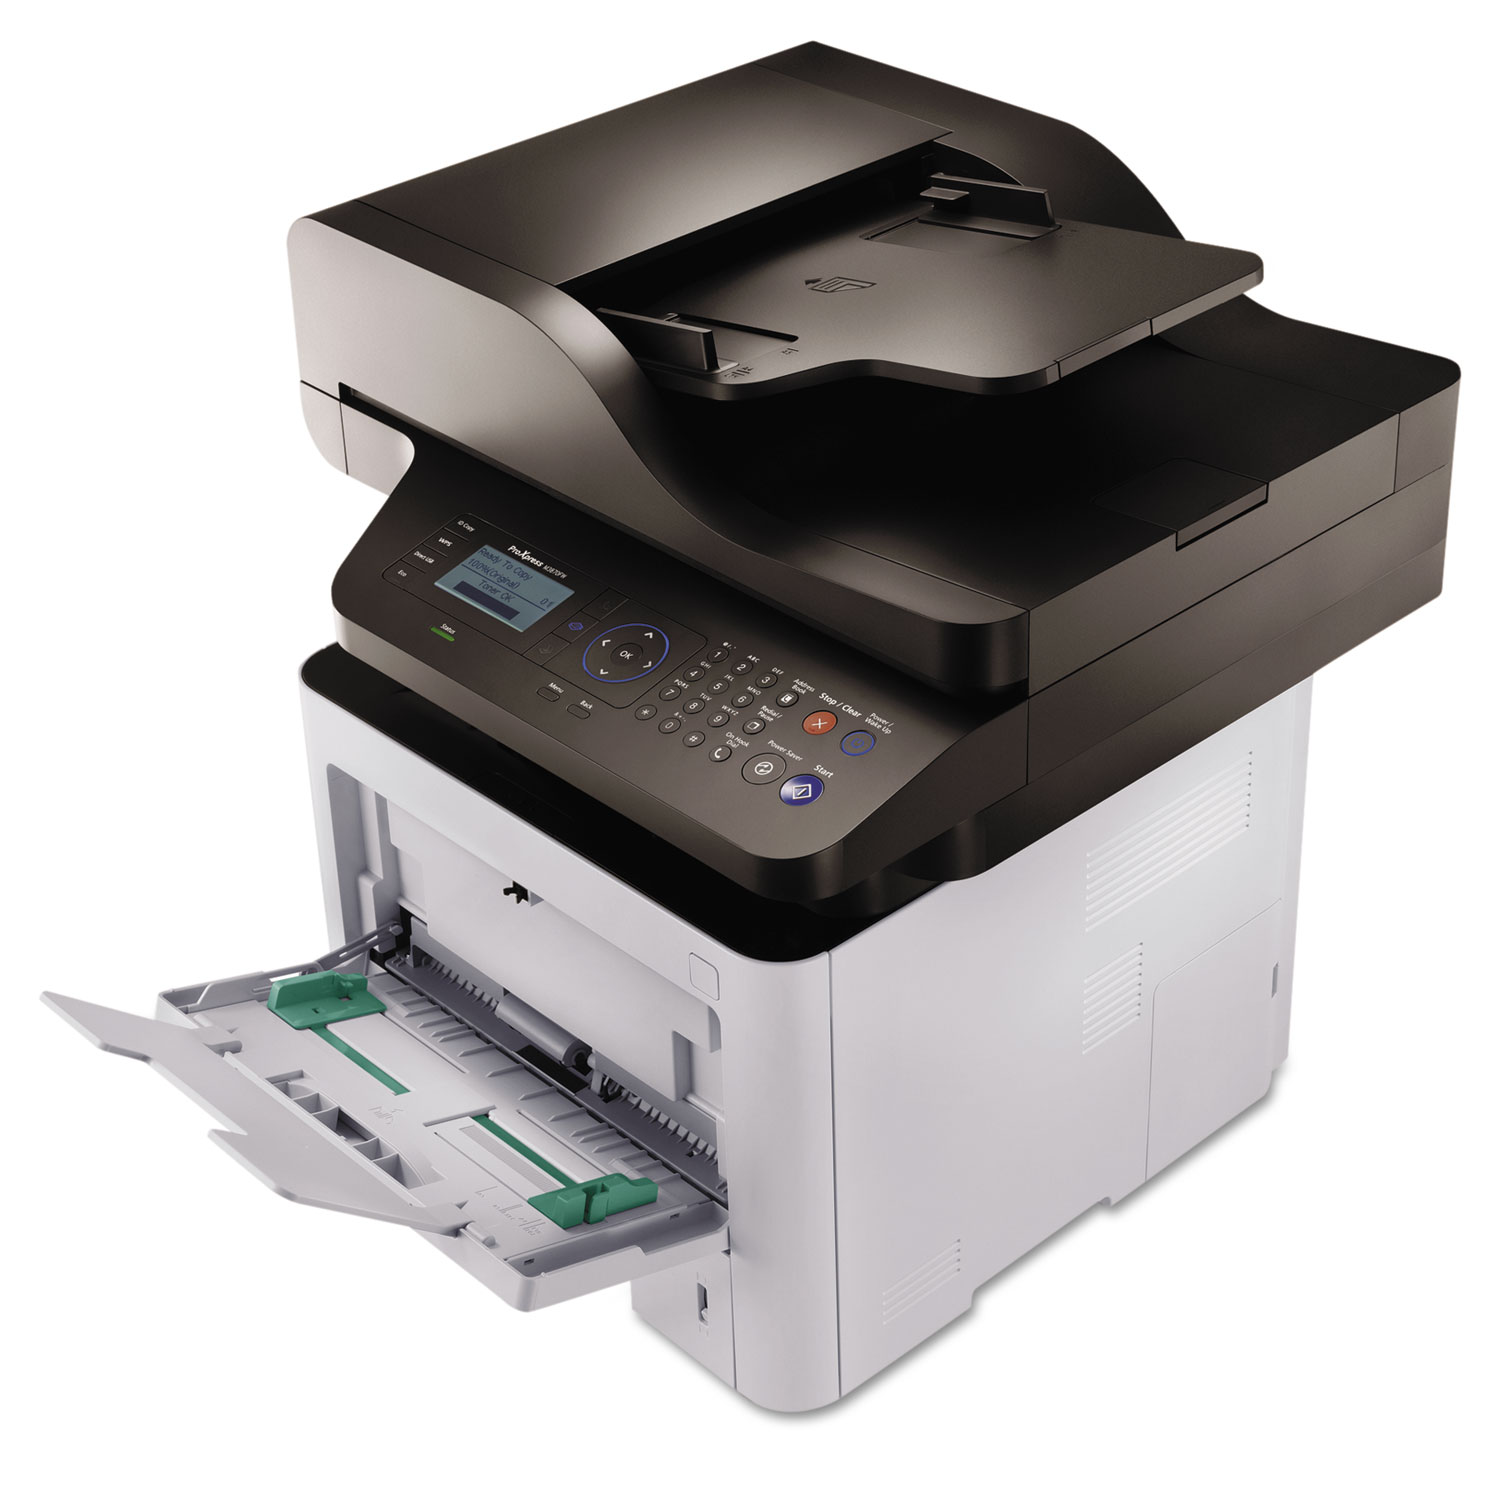 ProXpress SL-M3870FW Wireless Laser Multifunction Printer, Copy/Fax/Print/Scan